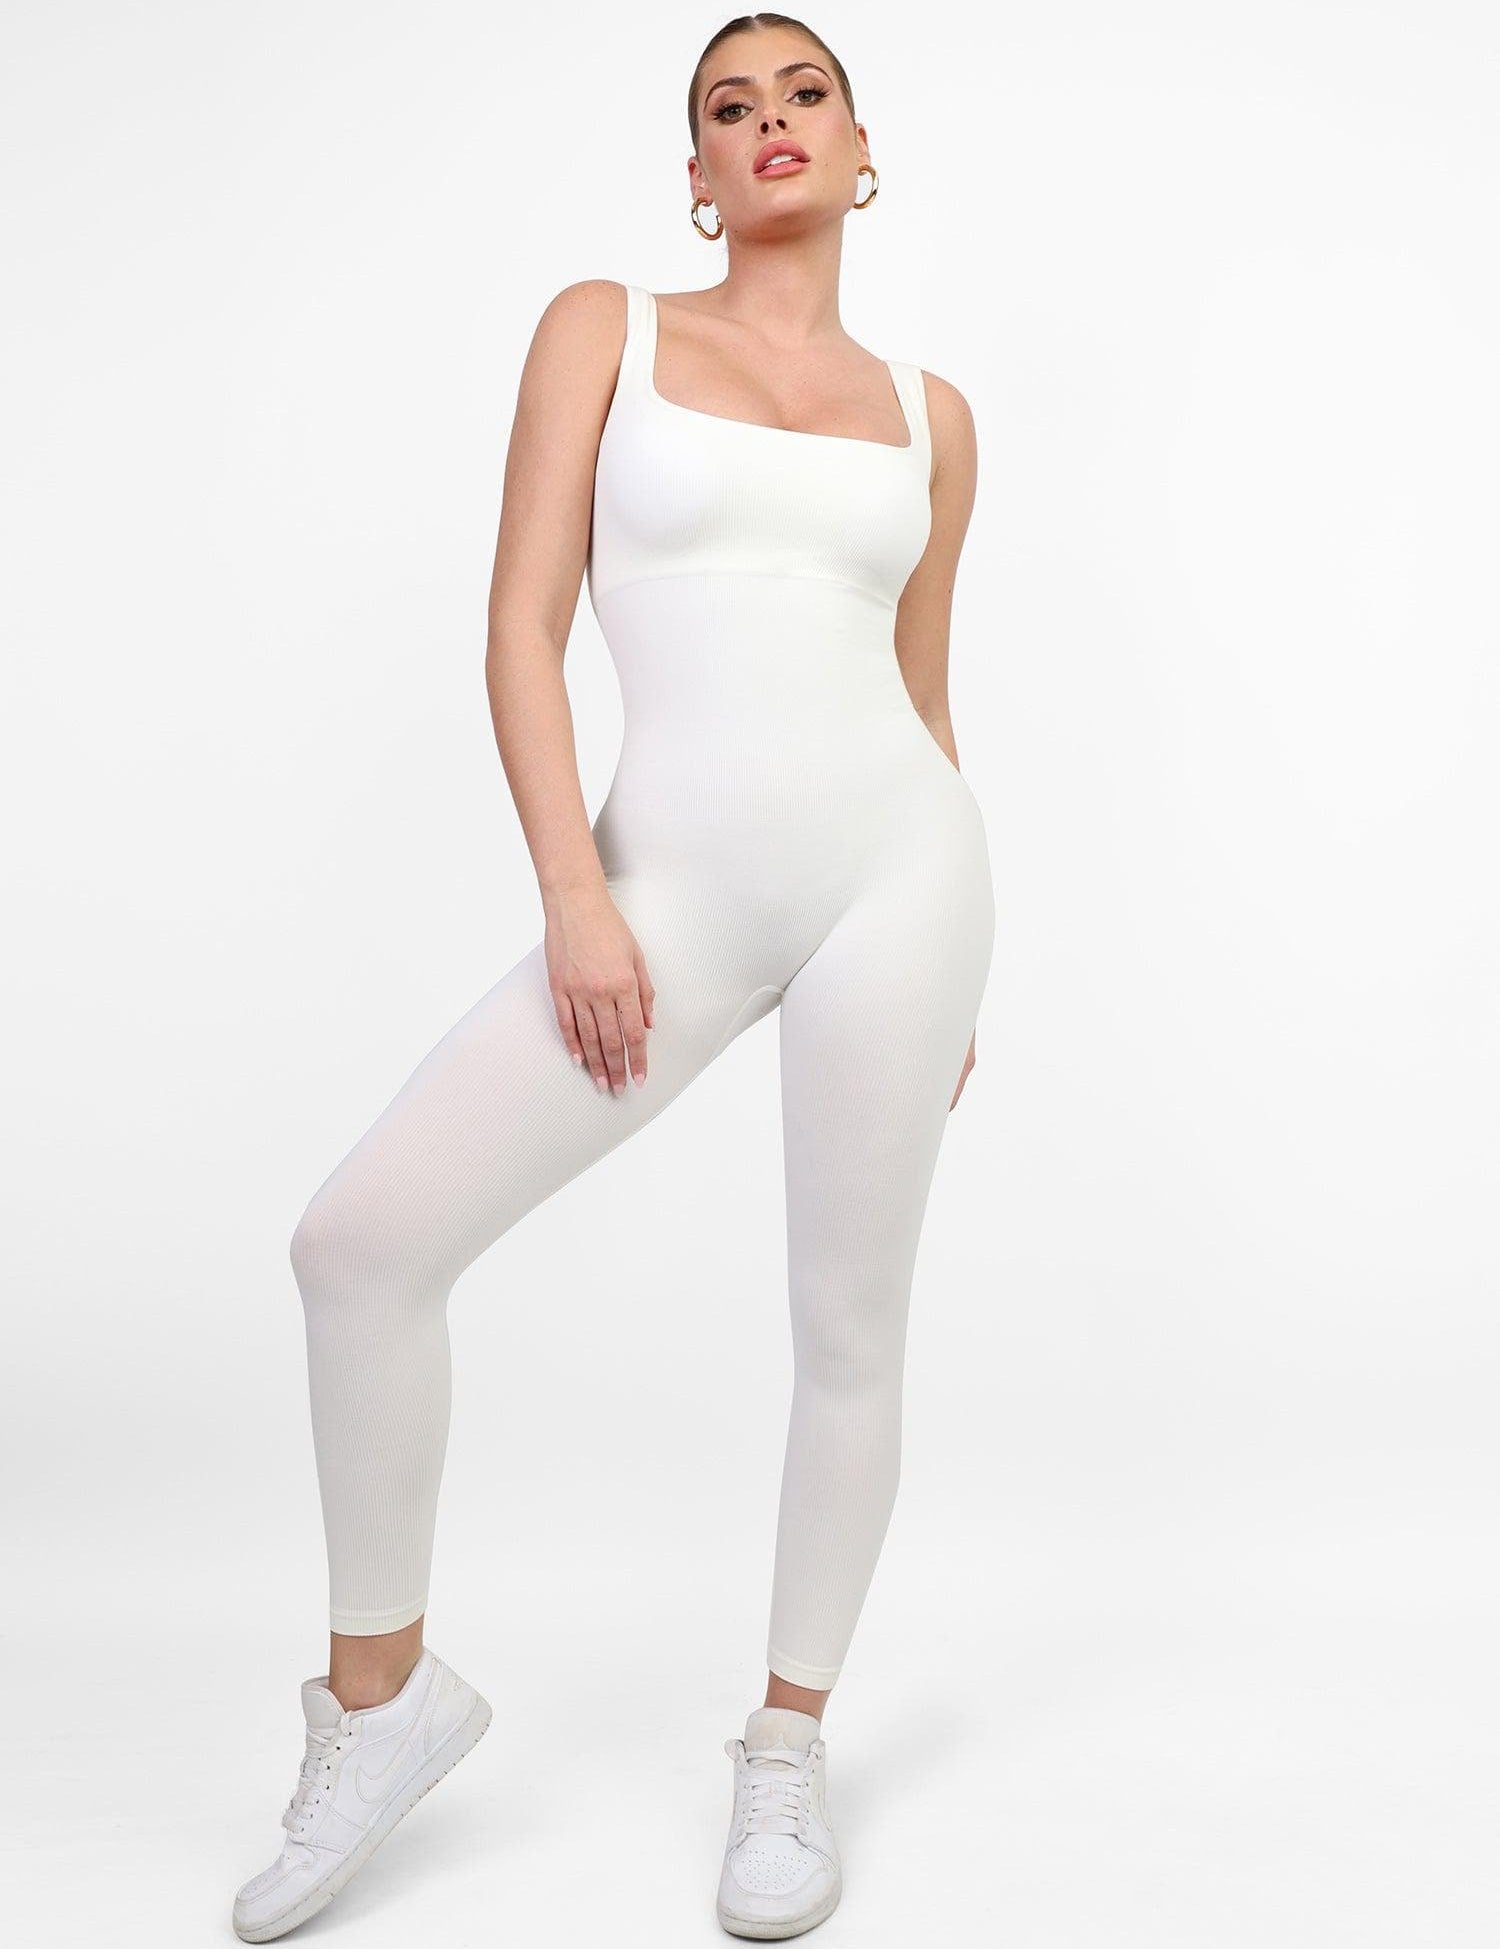 Popilush® Yoga Activewear Jumpsuit Seamless Square Neck One Piece Sport Romper